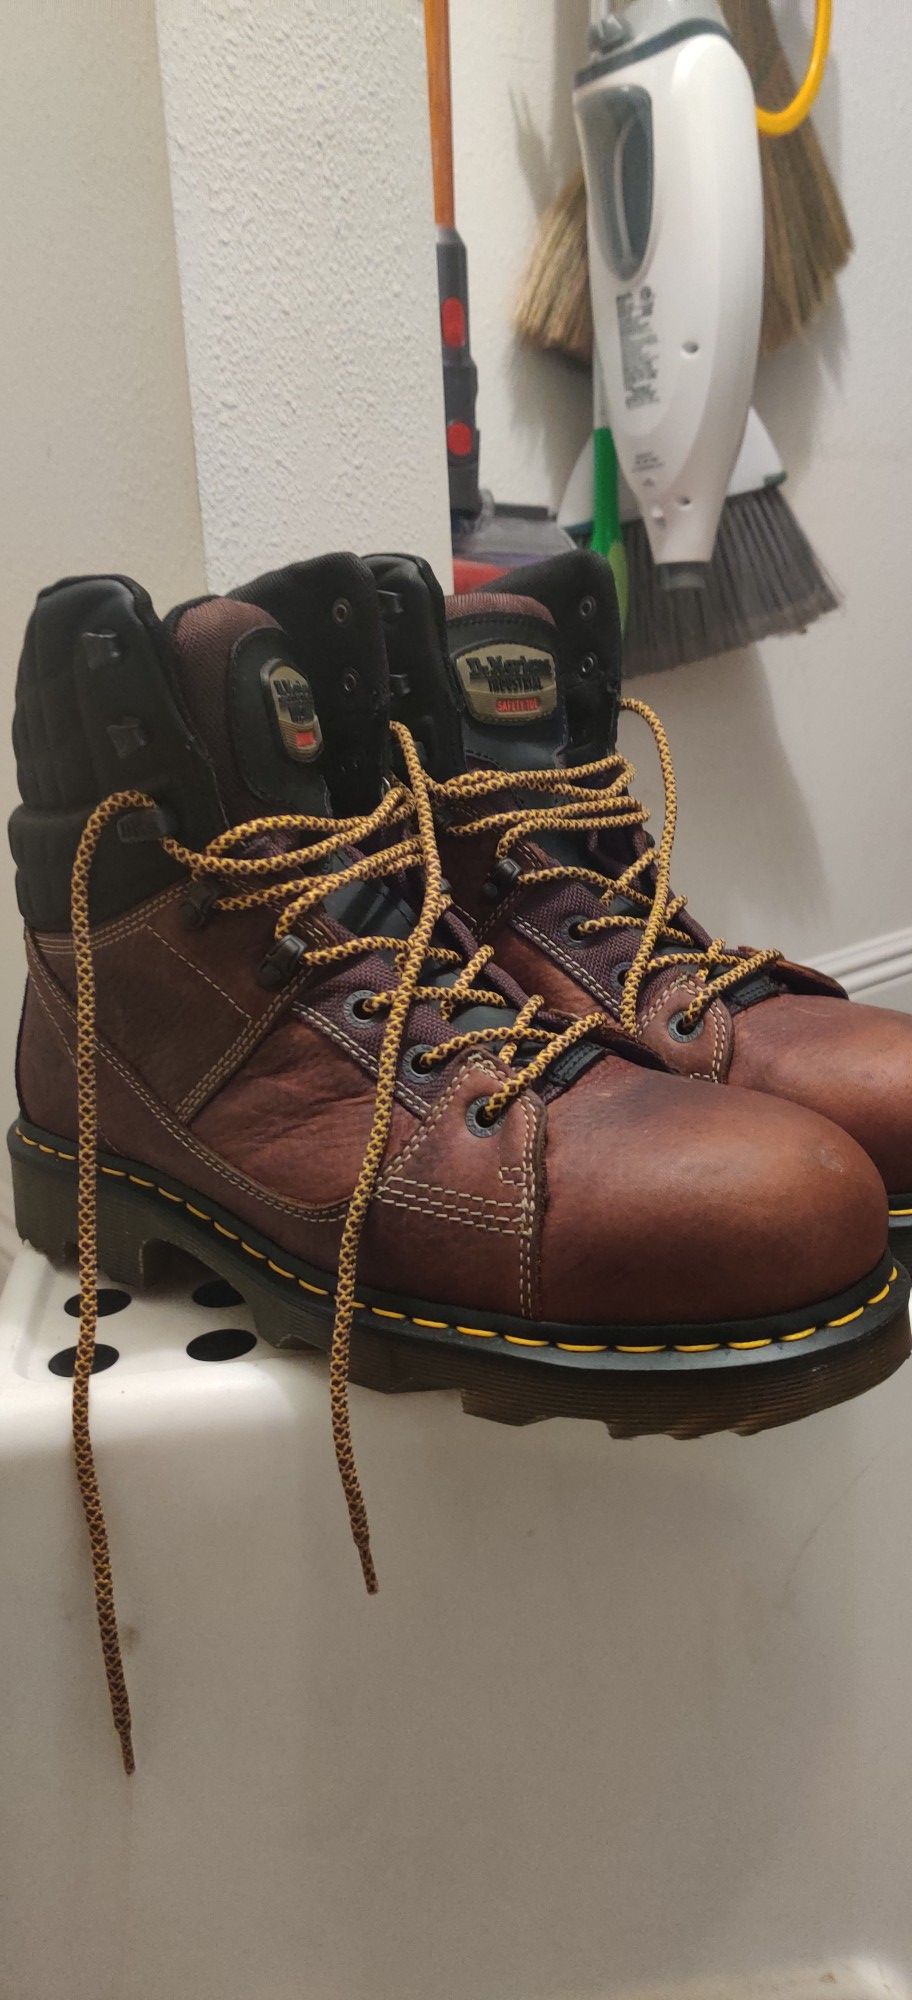 Dr Martens Industrial work boots sz 13